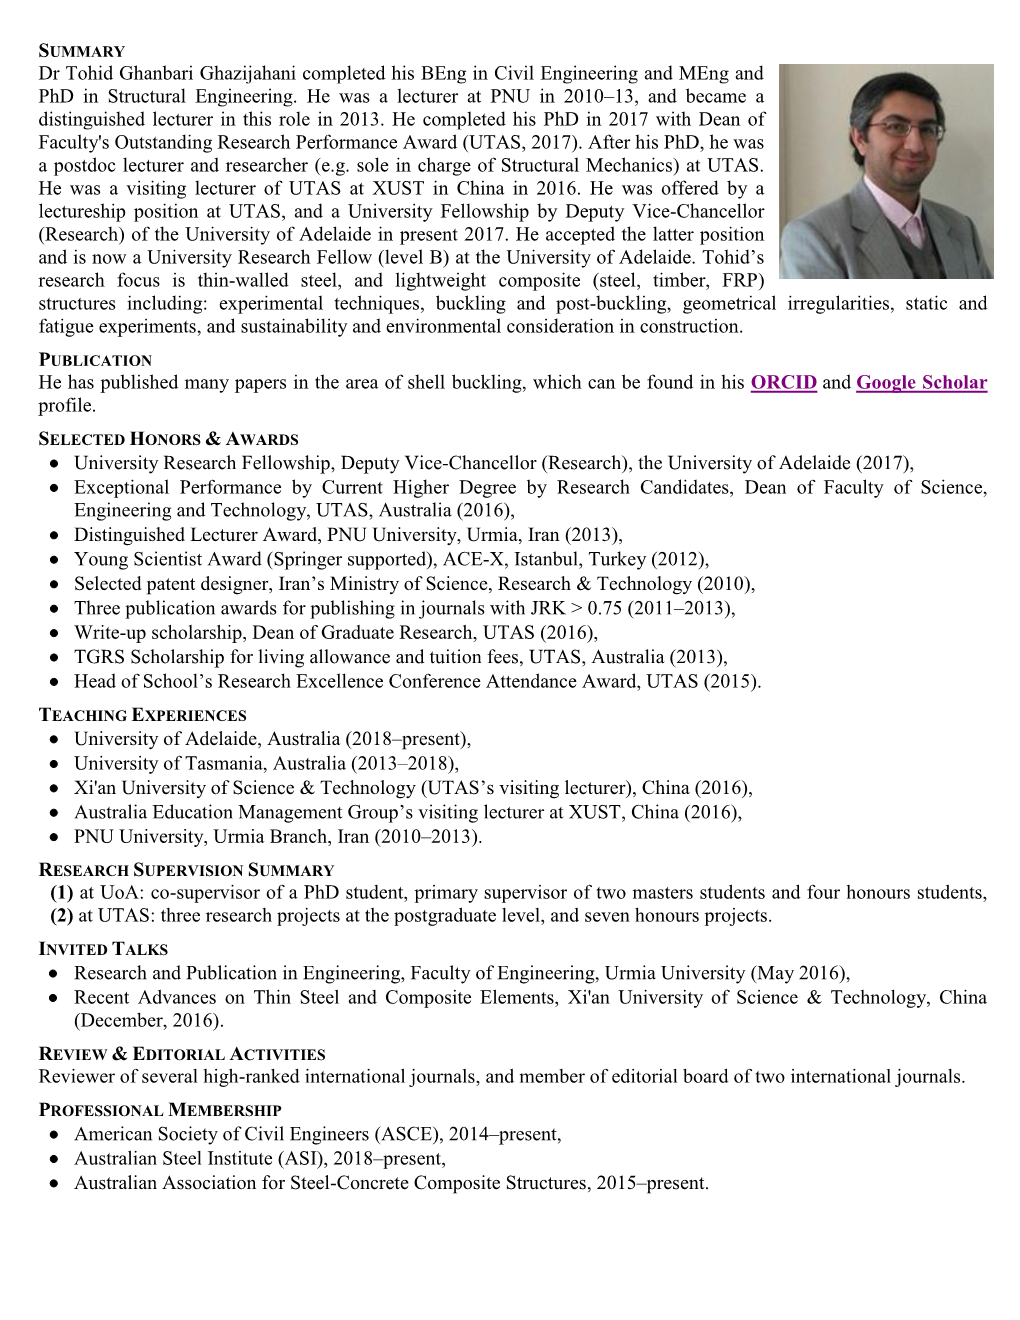 “CV of Tohid Ghanbari Ghazijahani”